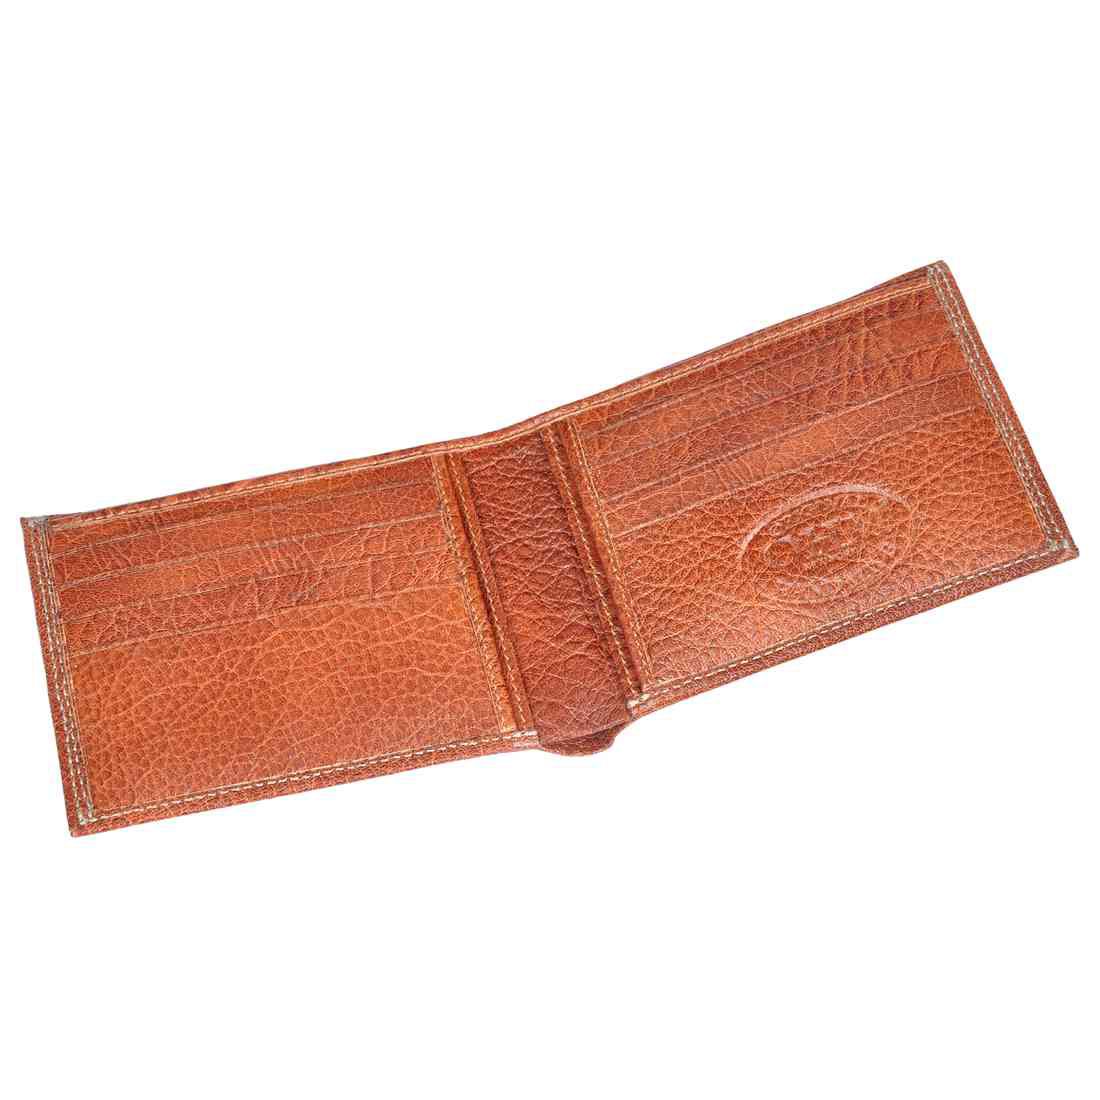 Buy Excutive Men's Leather Belt.100% Pure Genuine Leather Guaranteed. Designer  Belt for Men. (28) at